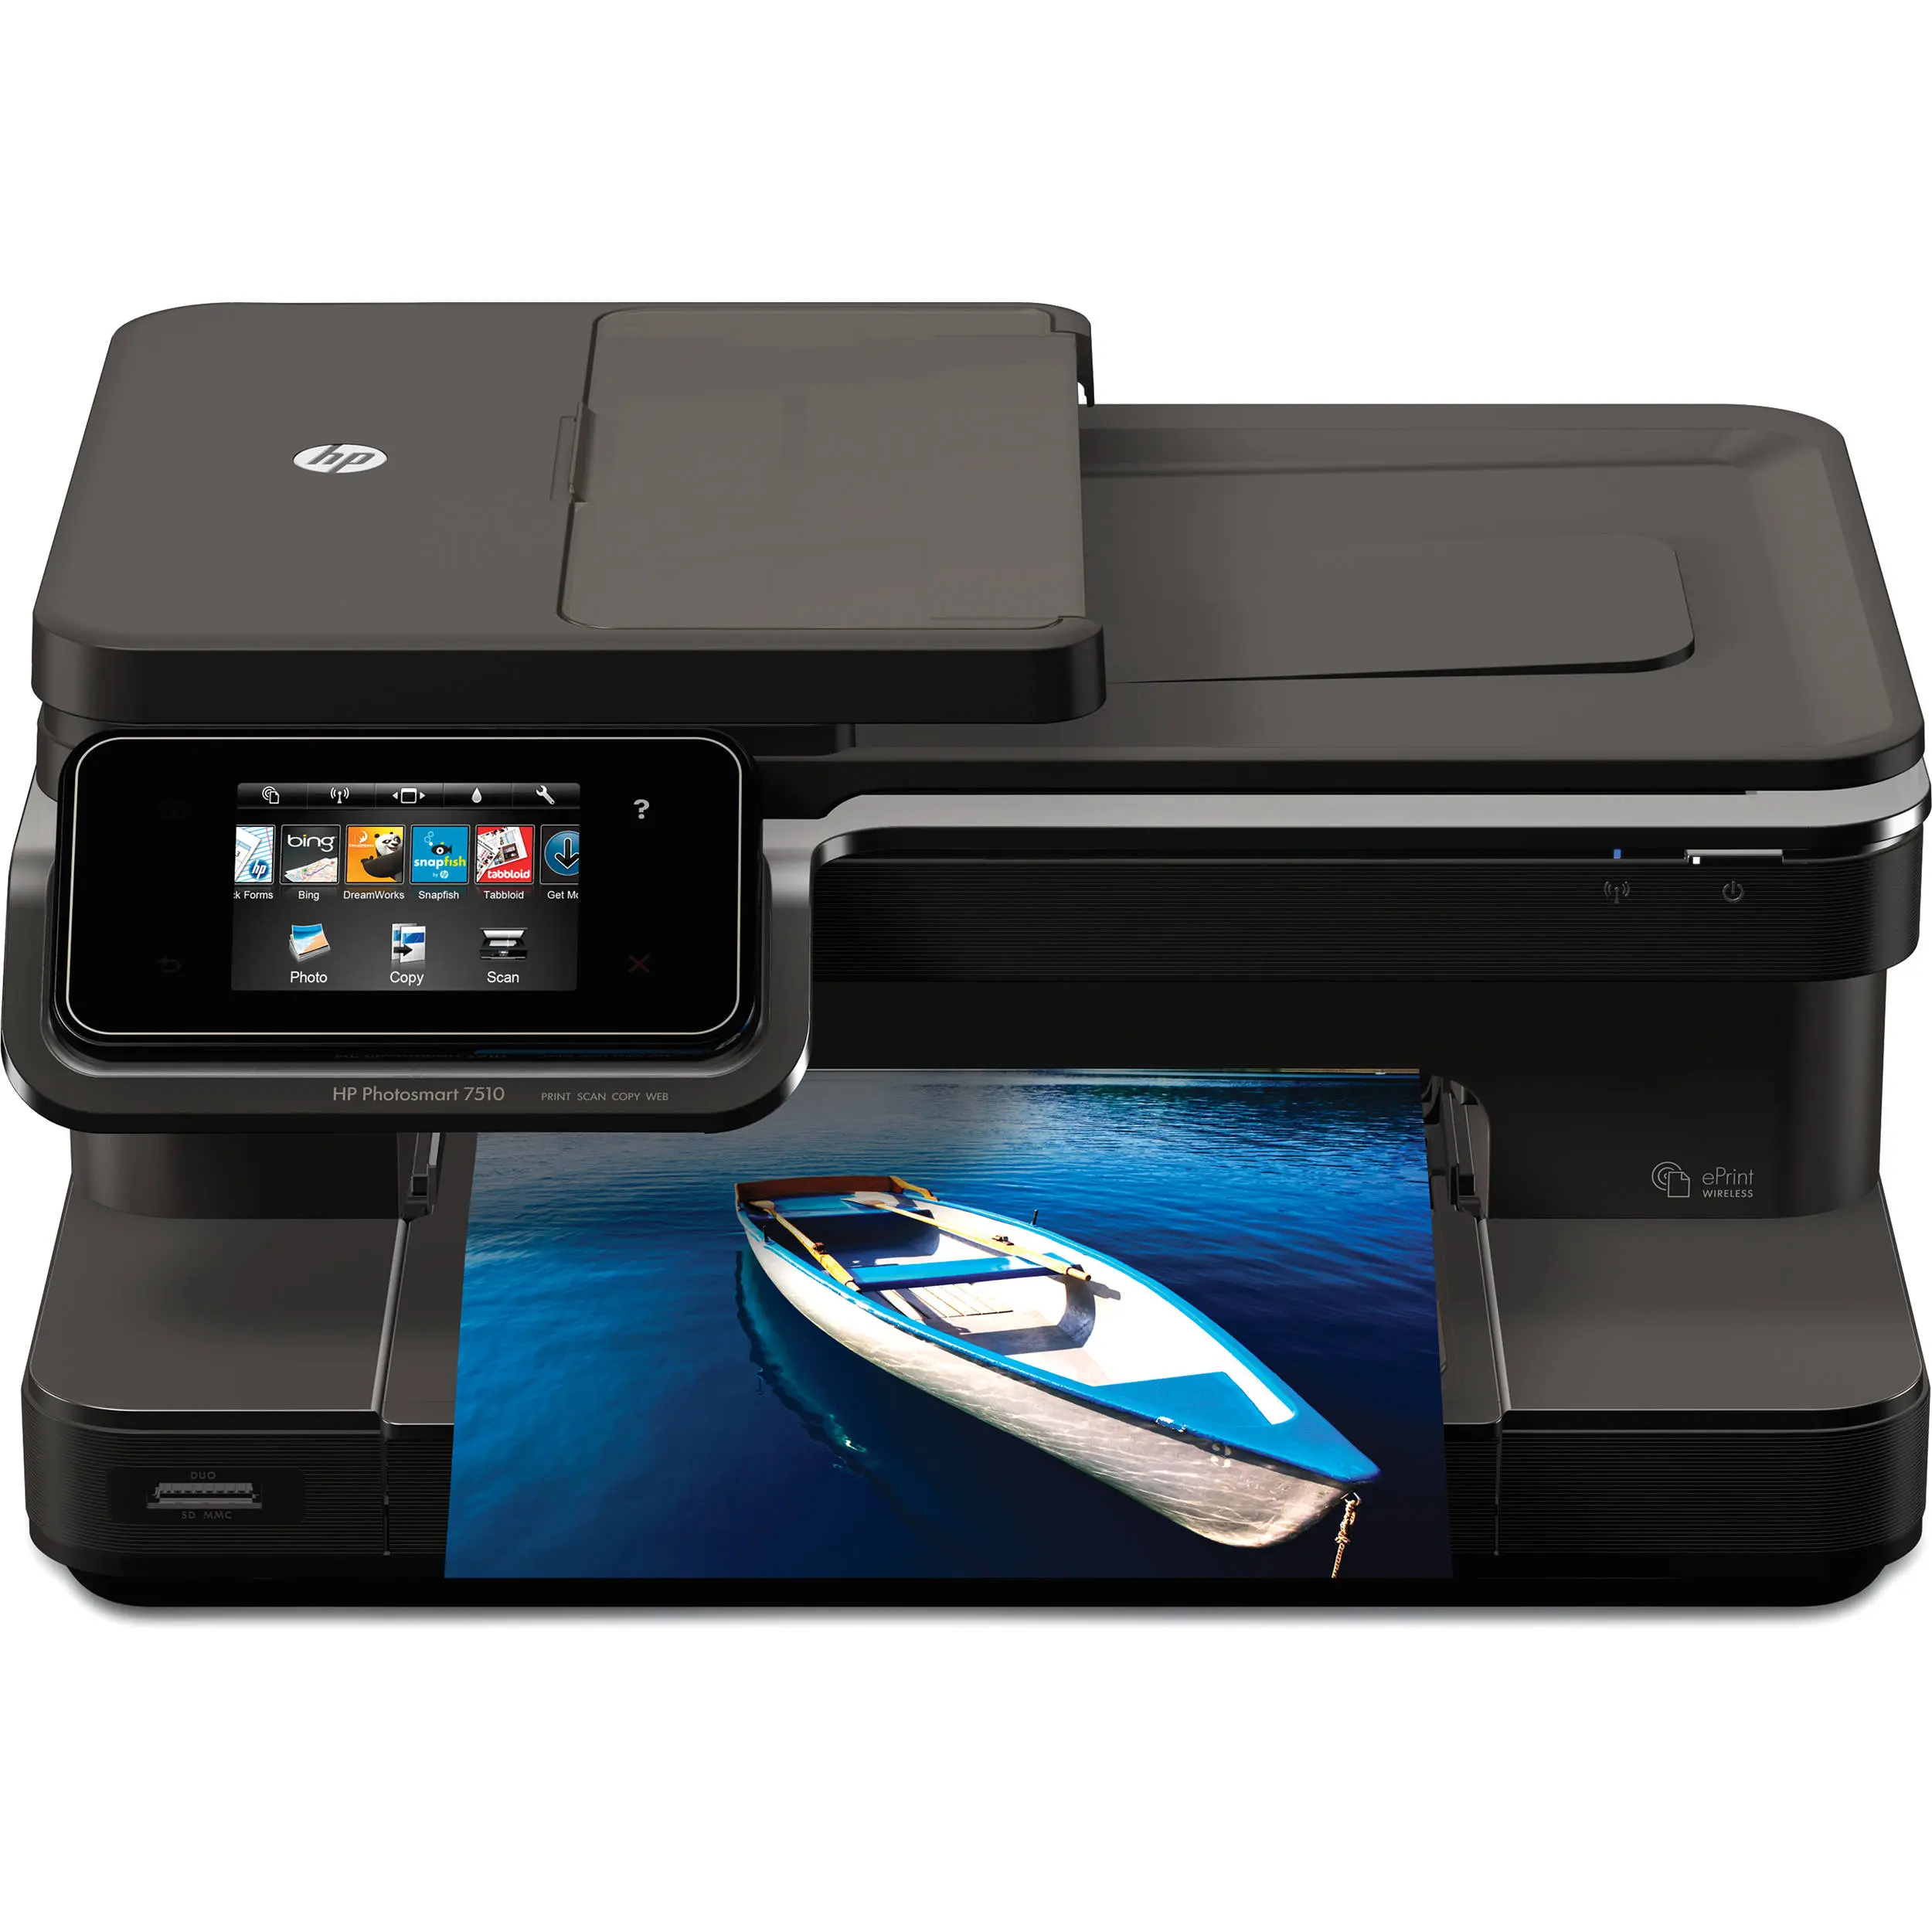 hewlett packard eprint compatible printers - How do I enable ePrint on my HP printer